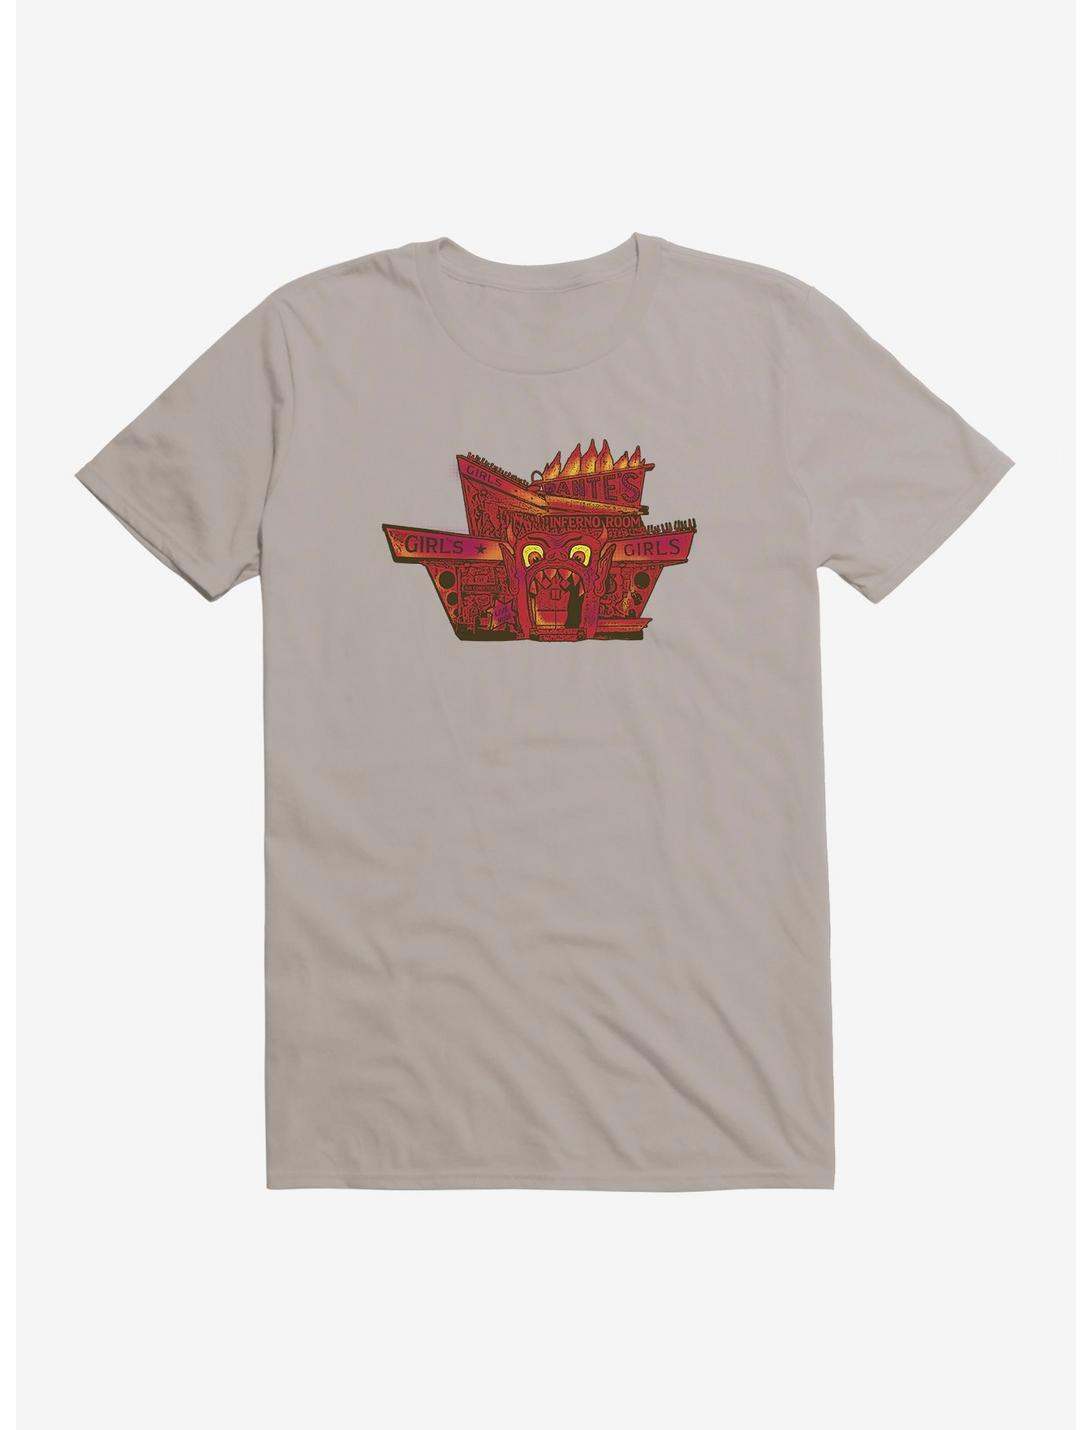 Beetlejuice Inferno Room T-Shirt, LIGHT GREY, hi-res